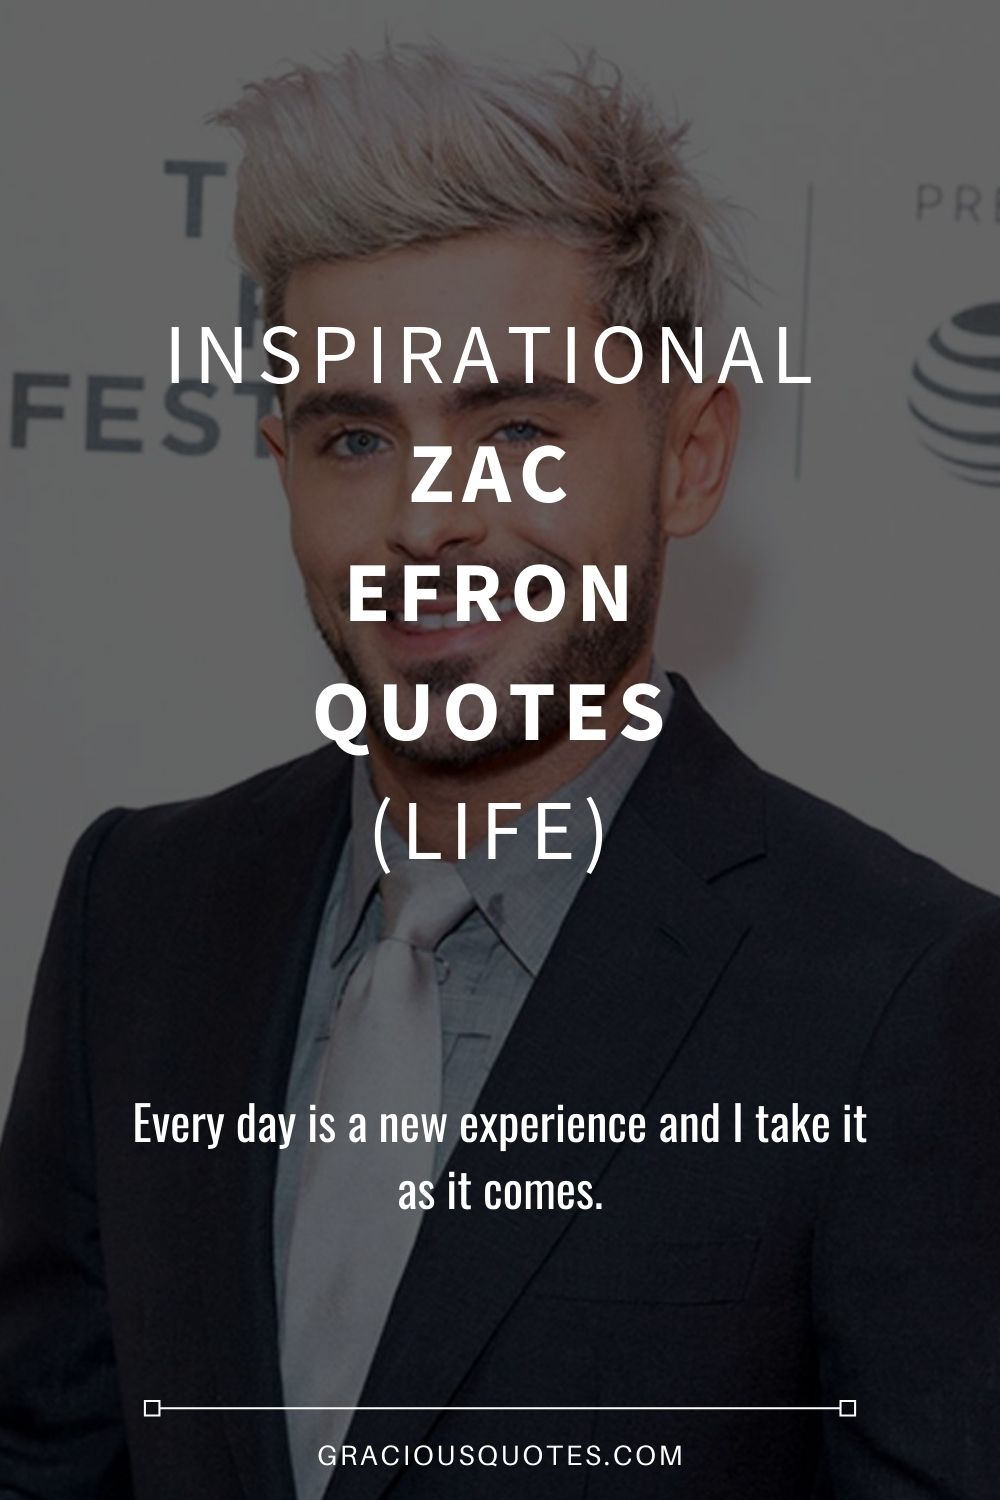 Inspirational Zac Efron Quotes (LIFE) - Gracious Quotes